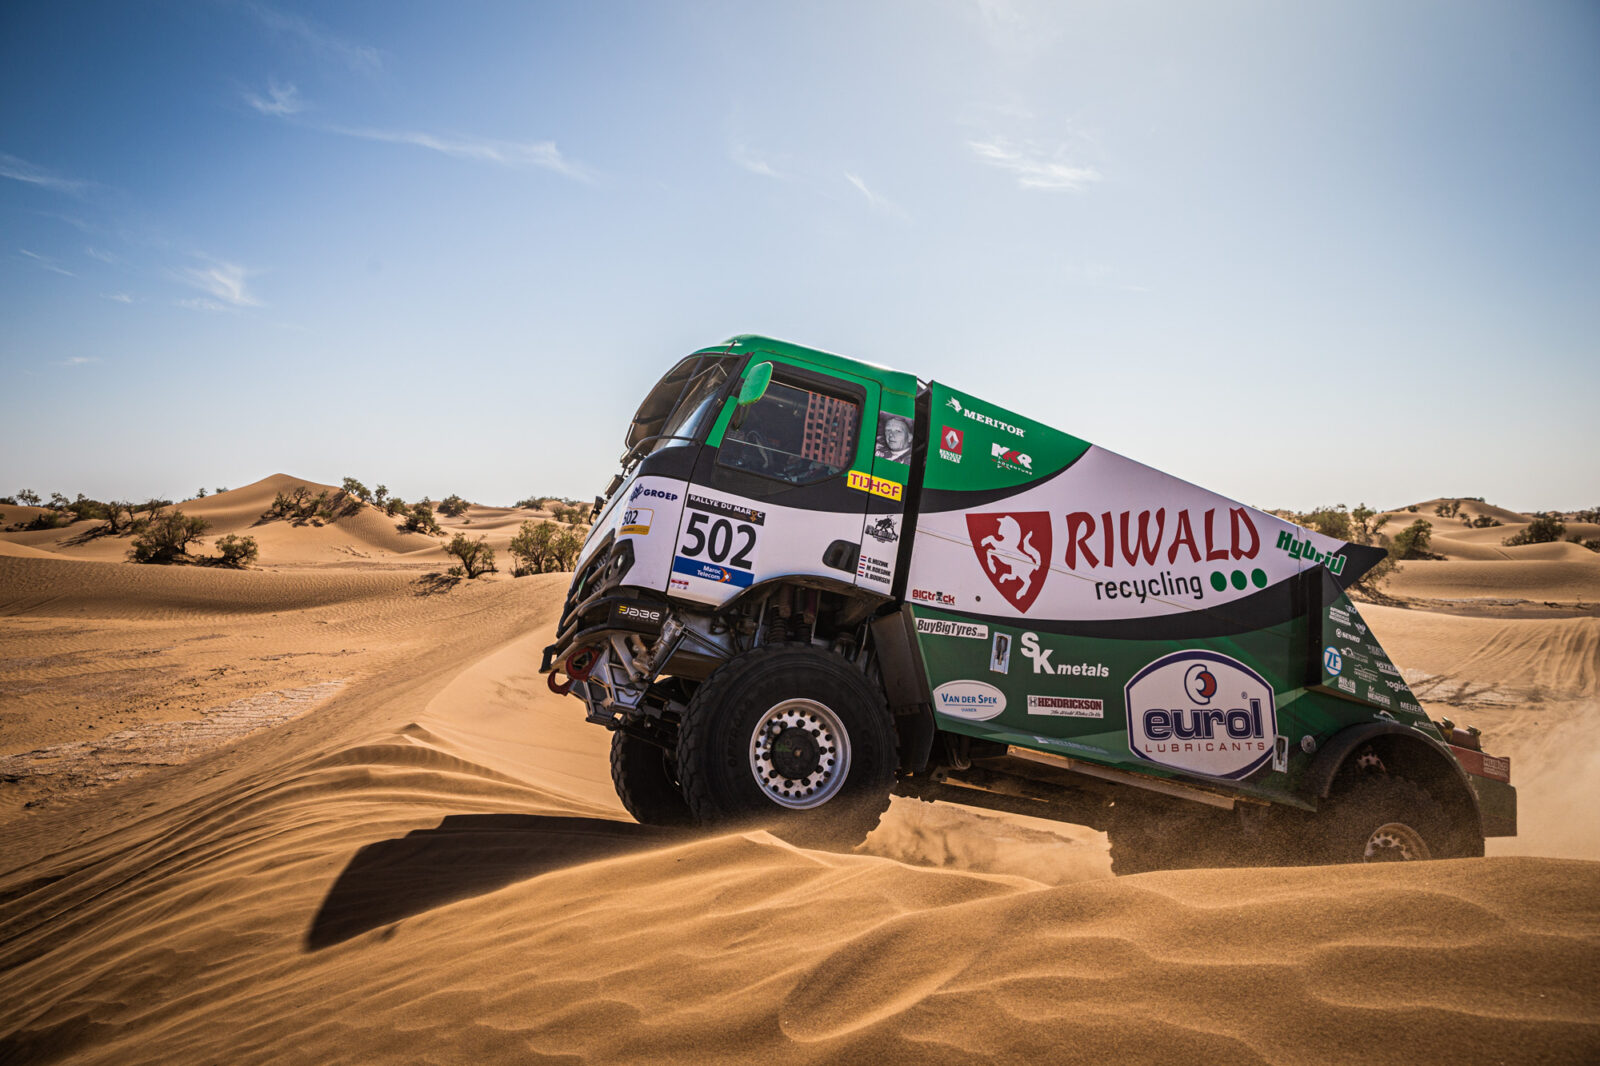 Rallye du Maroc stage 1